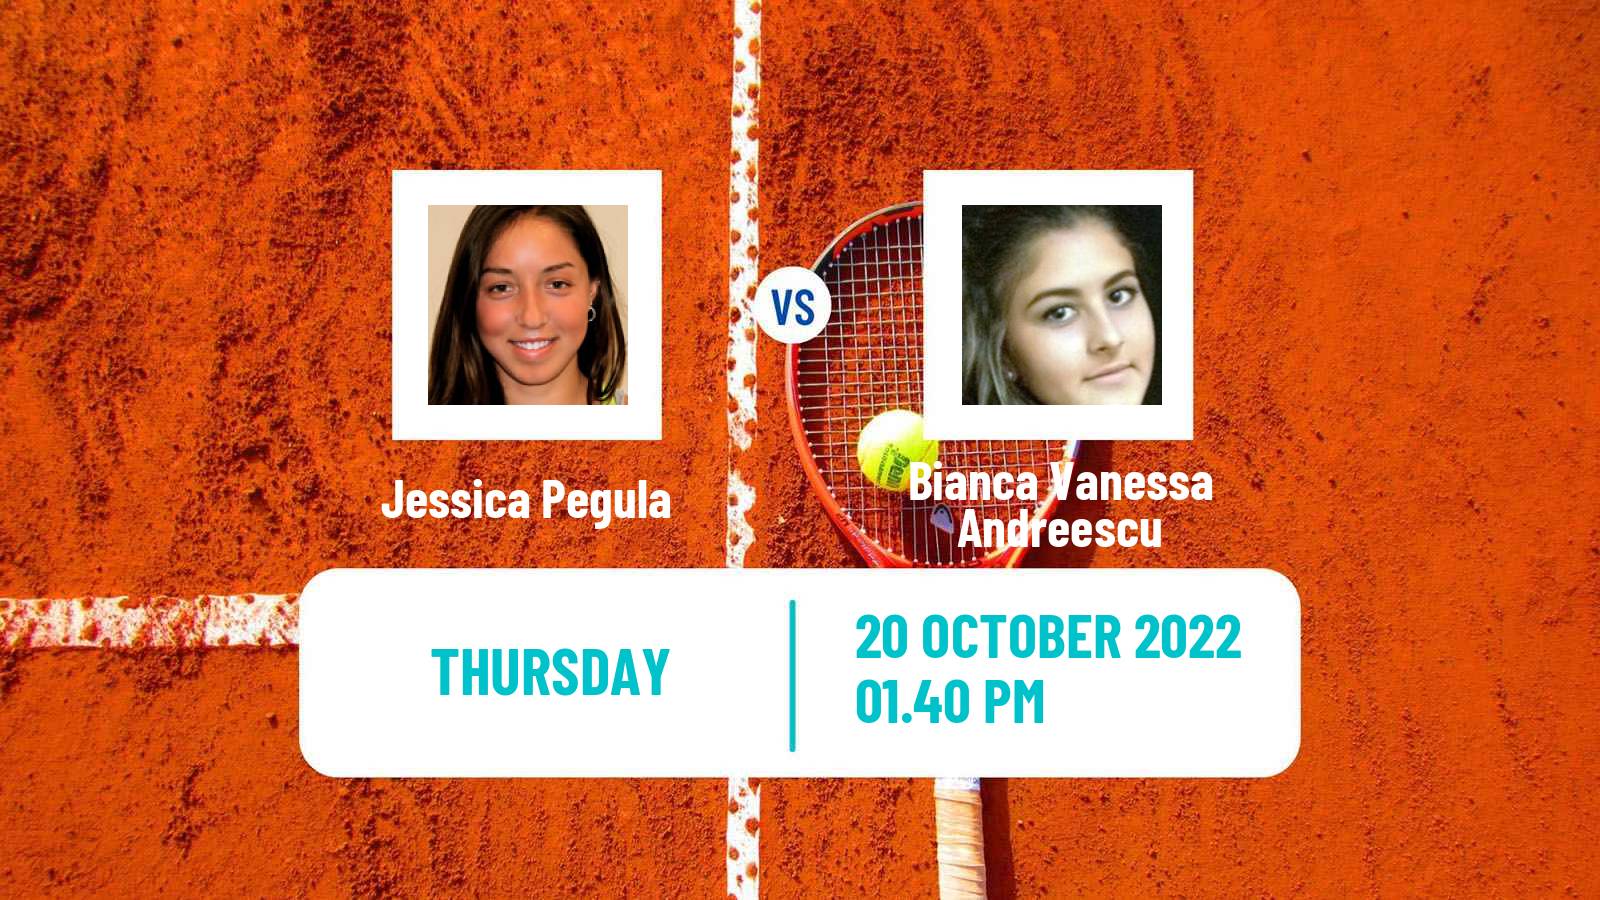 Tennis WTA Guadalajara 2 Jessica Pegula - Bianca Vanessa Andreescu